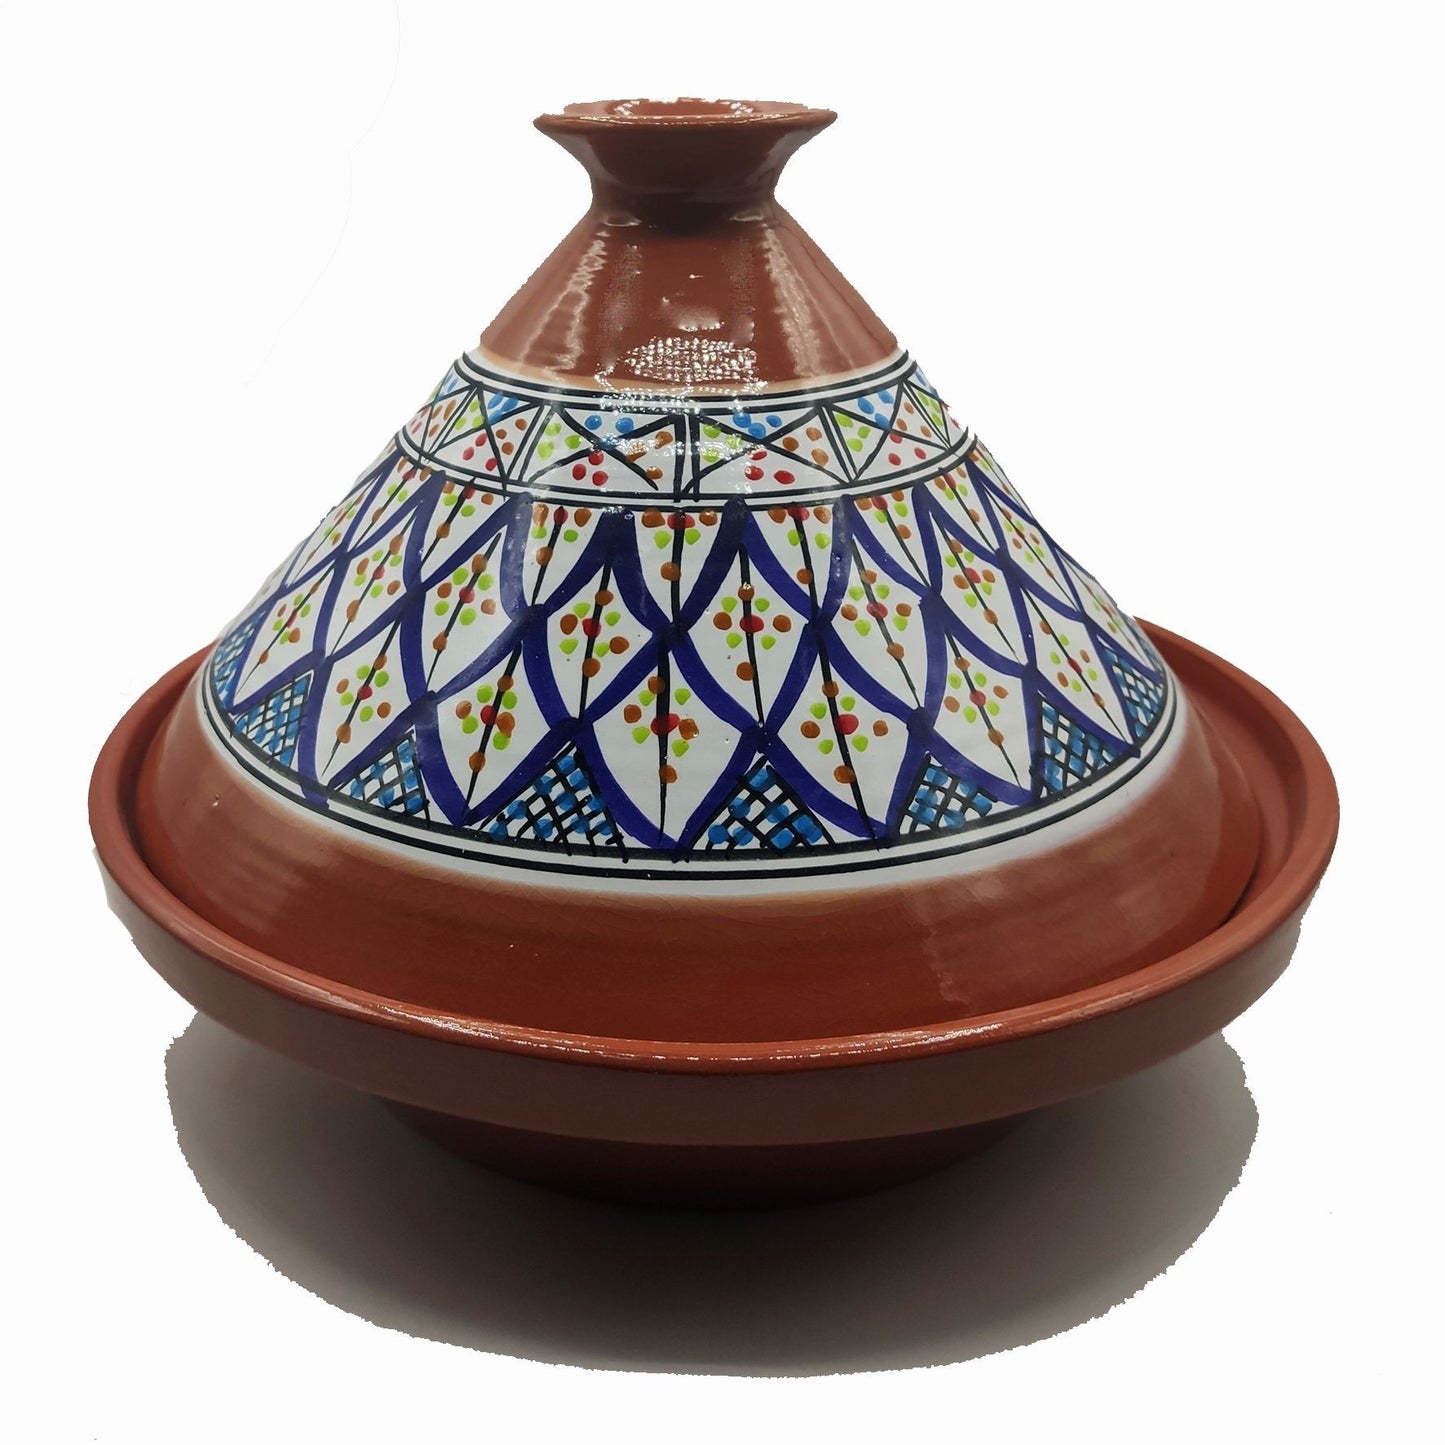 Tajine Terracotta Pot Etnisch Marokkaanse Tunesische Schaal XL 32cm 2910201100